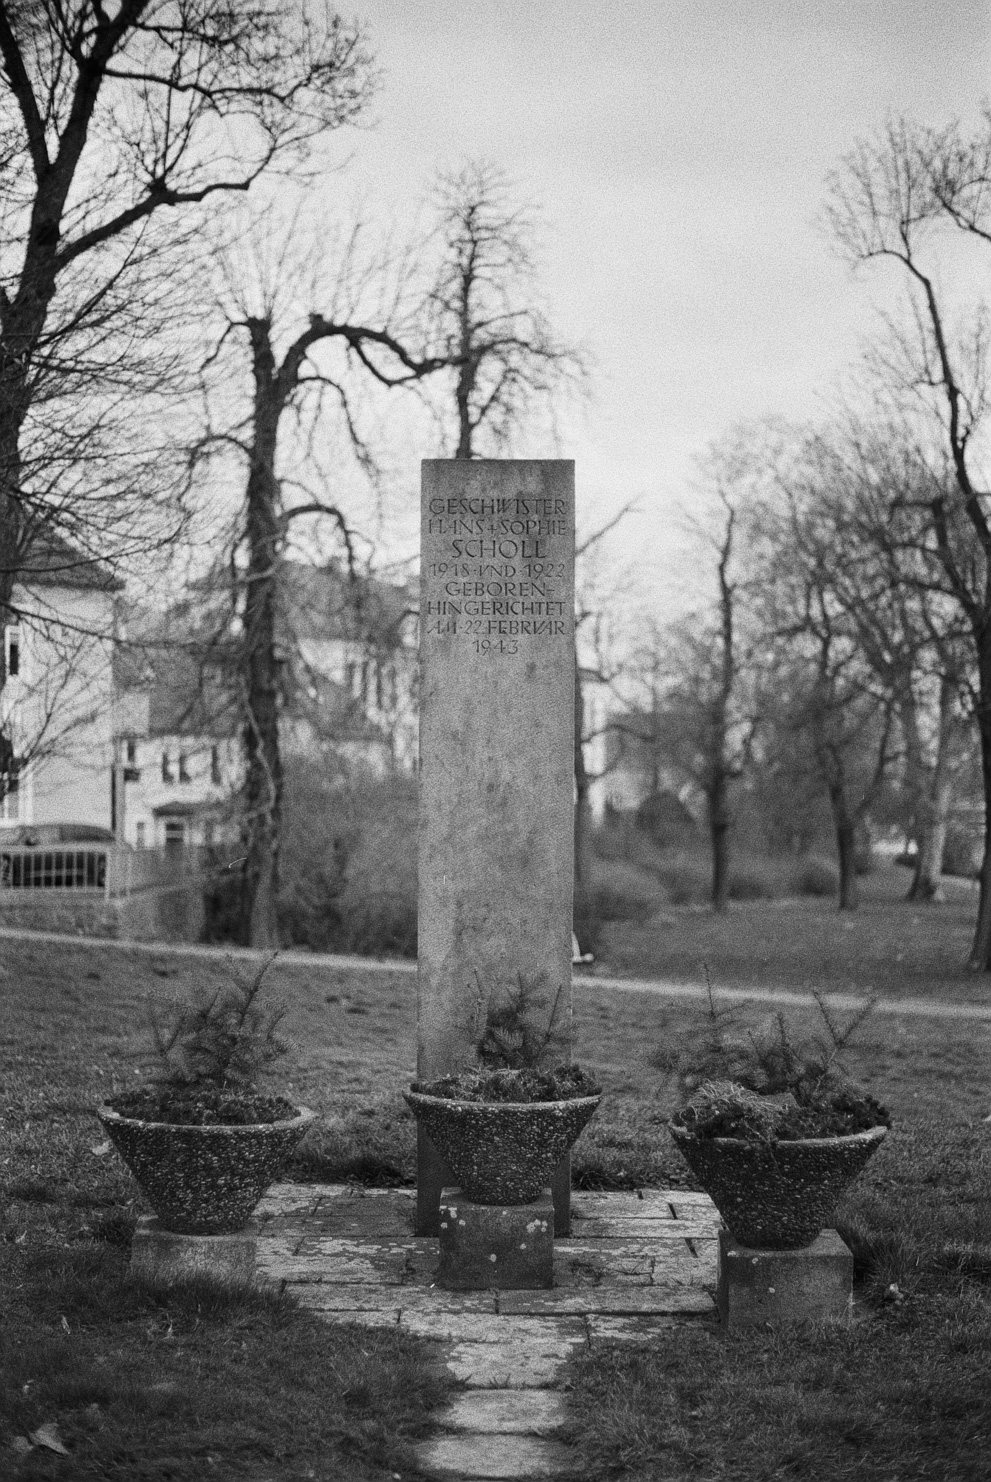 Geschwister Scholl memorial in Großenhain. Shot on Agfa APX 100